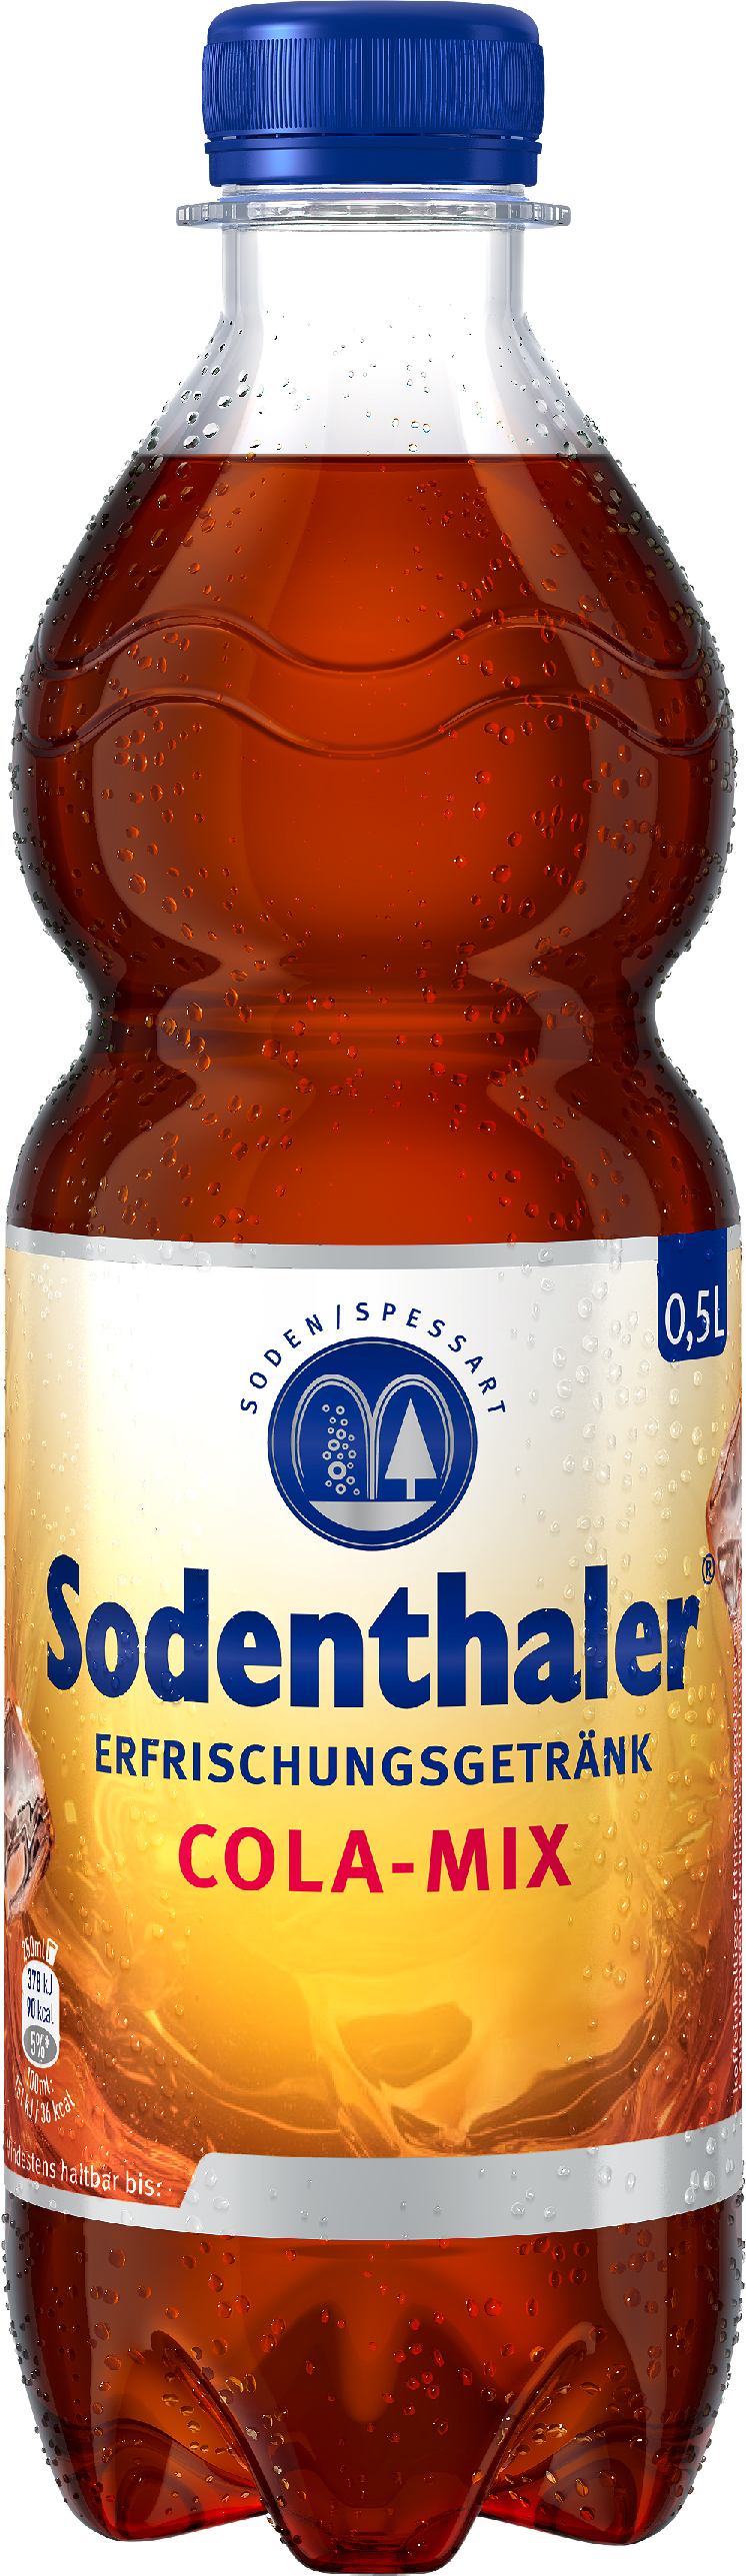 Sodenthaler Limonade Cola-Mix